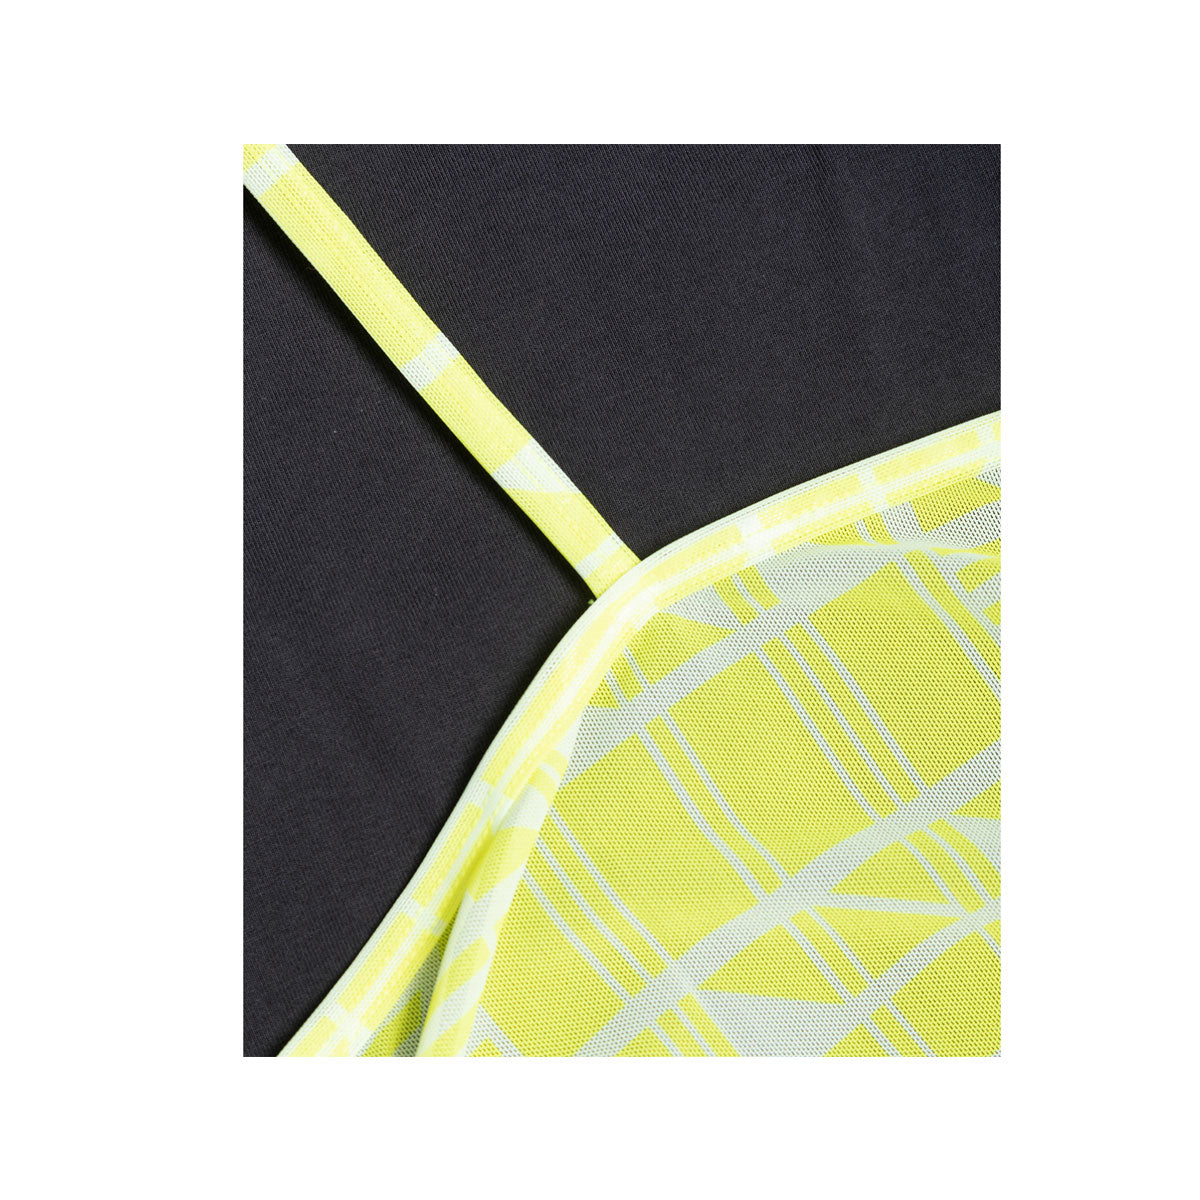 Nike Women's Sportswear NSW Indio Layered Tank Dress Lemon Venom XS-2XL